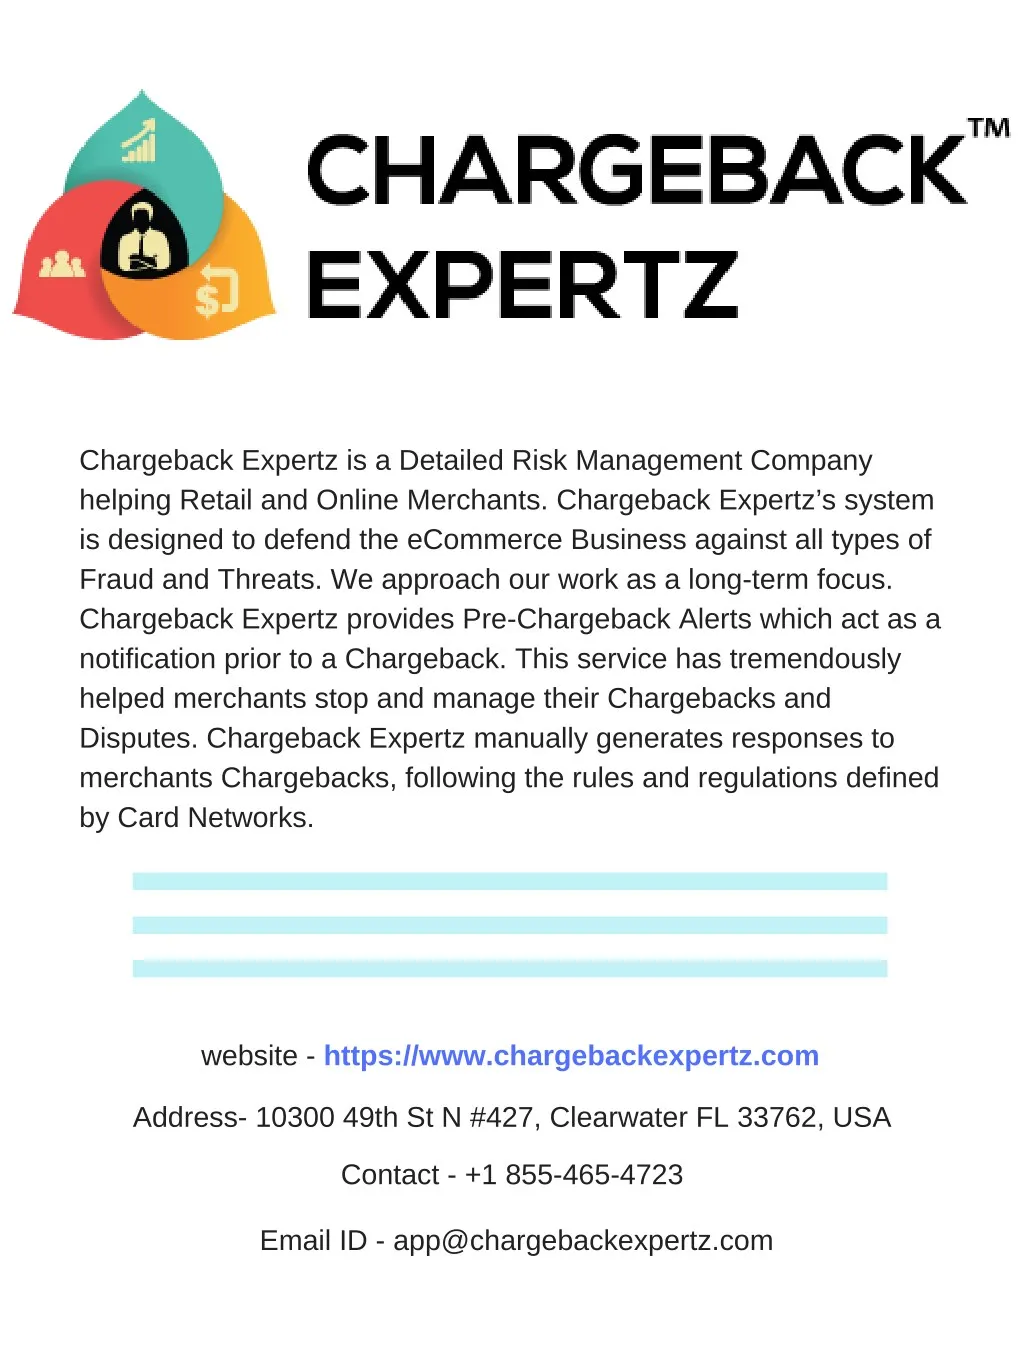 chargeback expertz is a detailed risk management